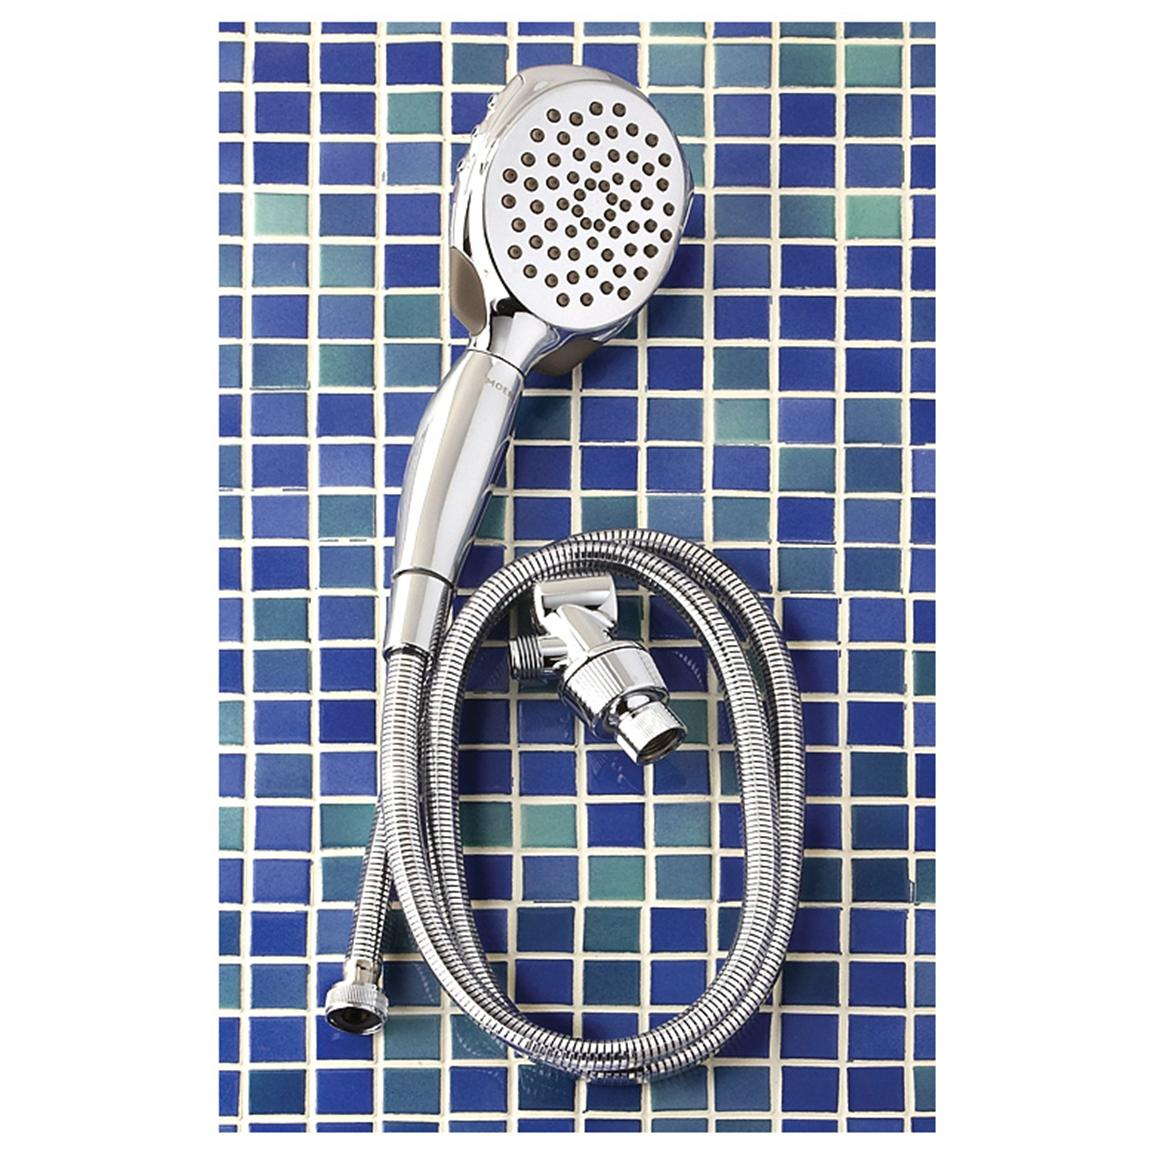 moen-twist-handheld-shower-head-283673-bath-at-sportsman-s-guide